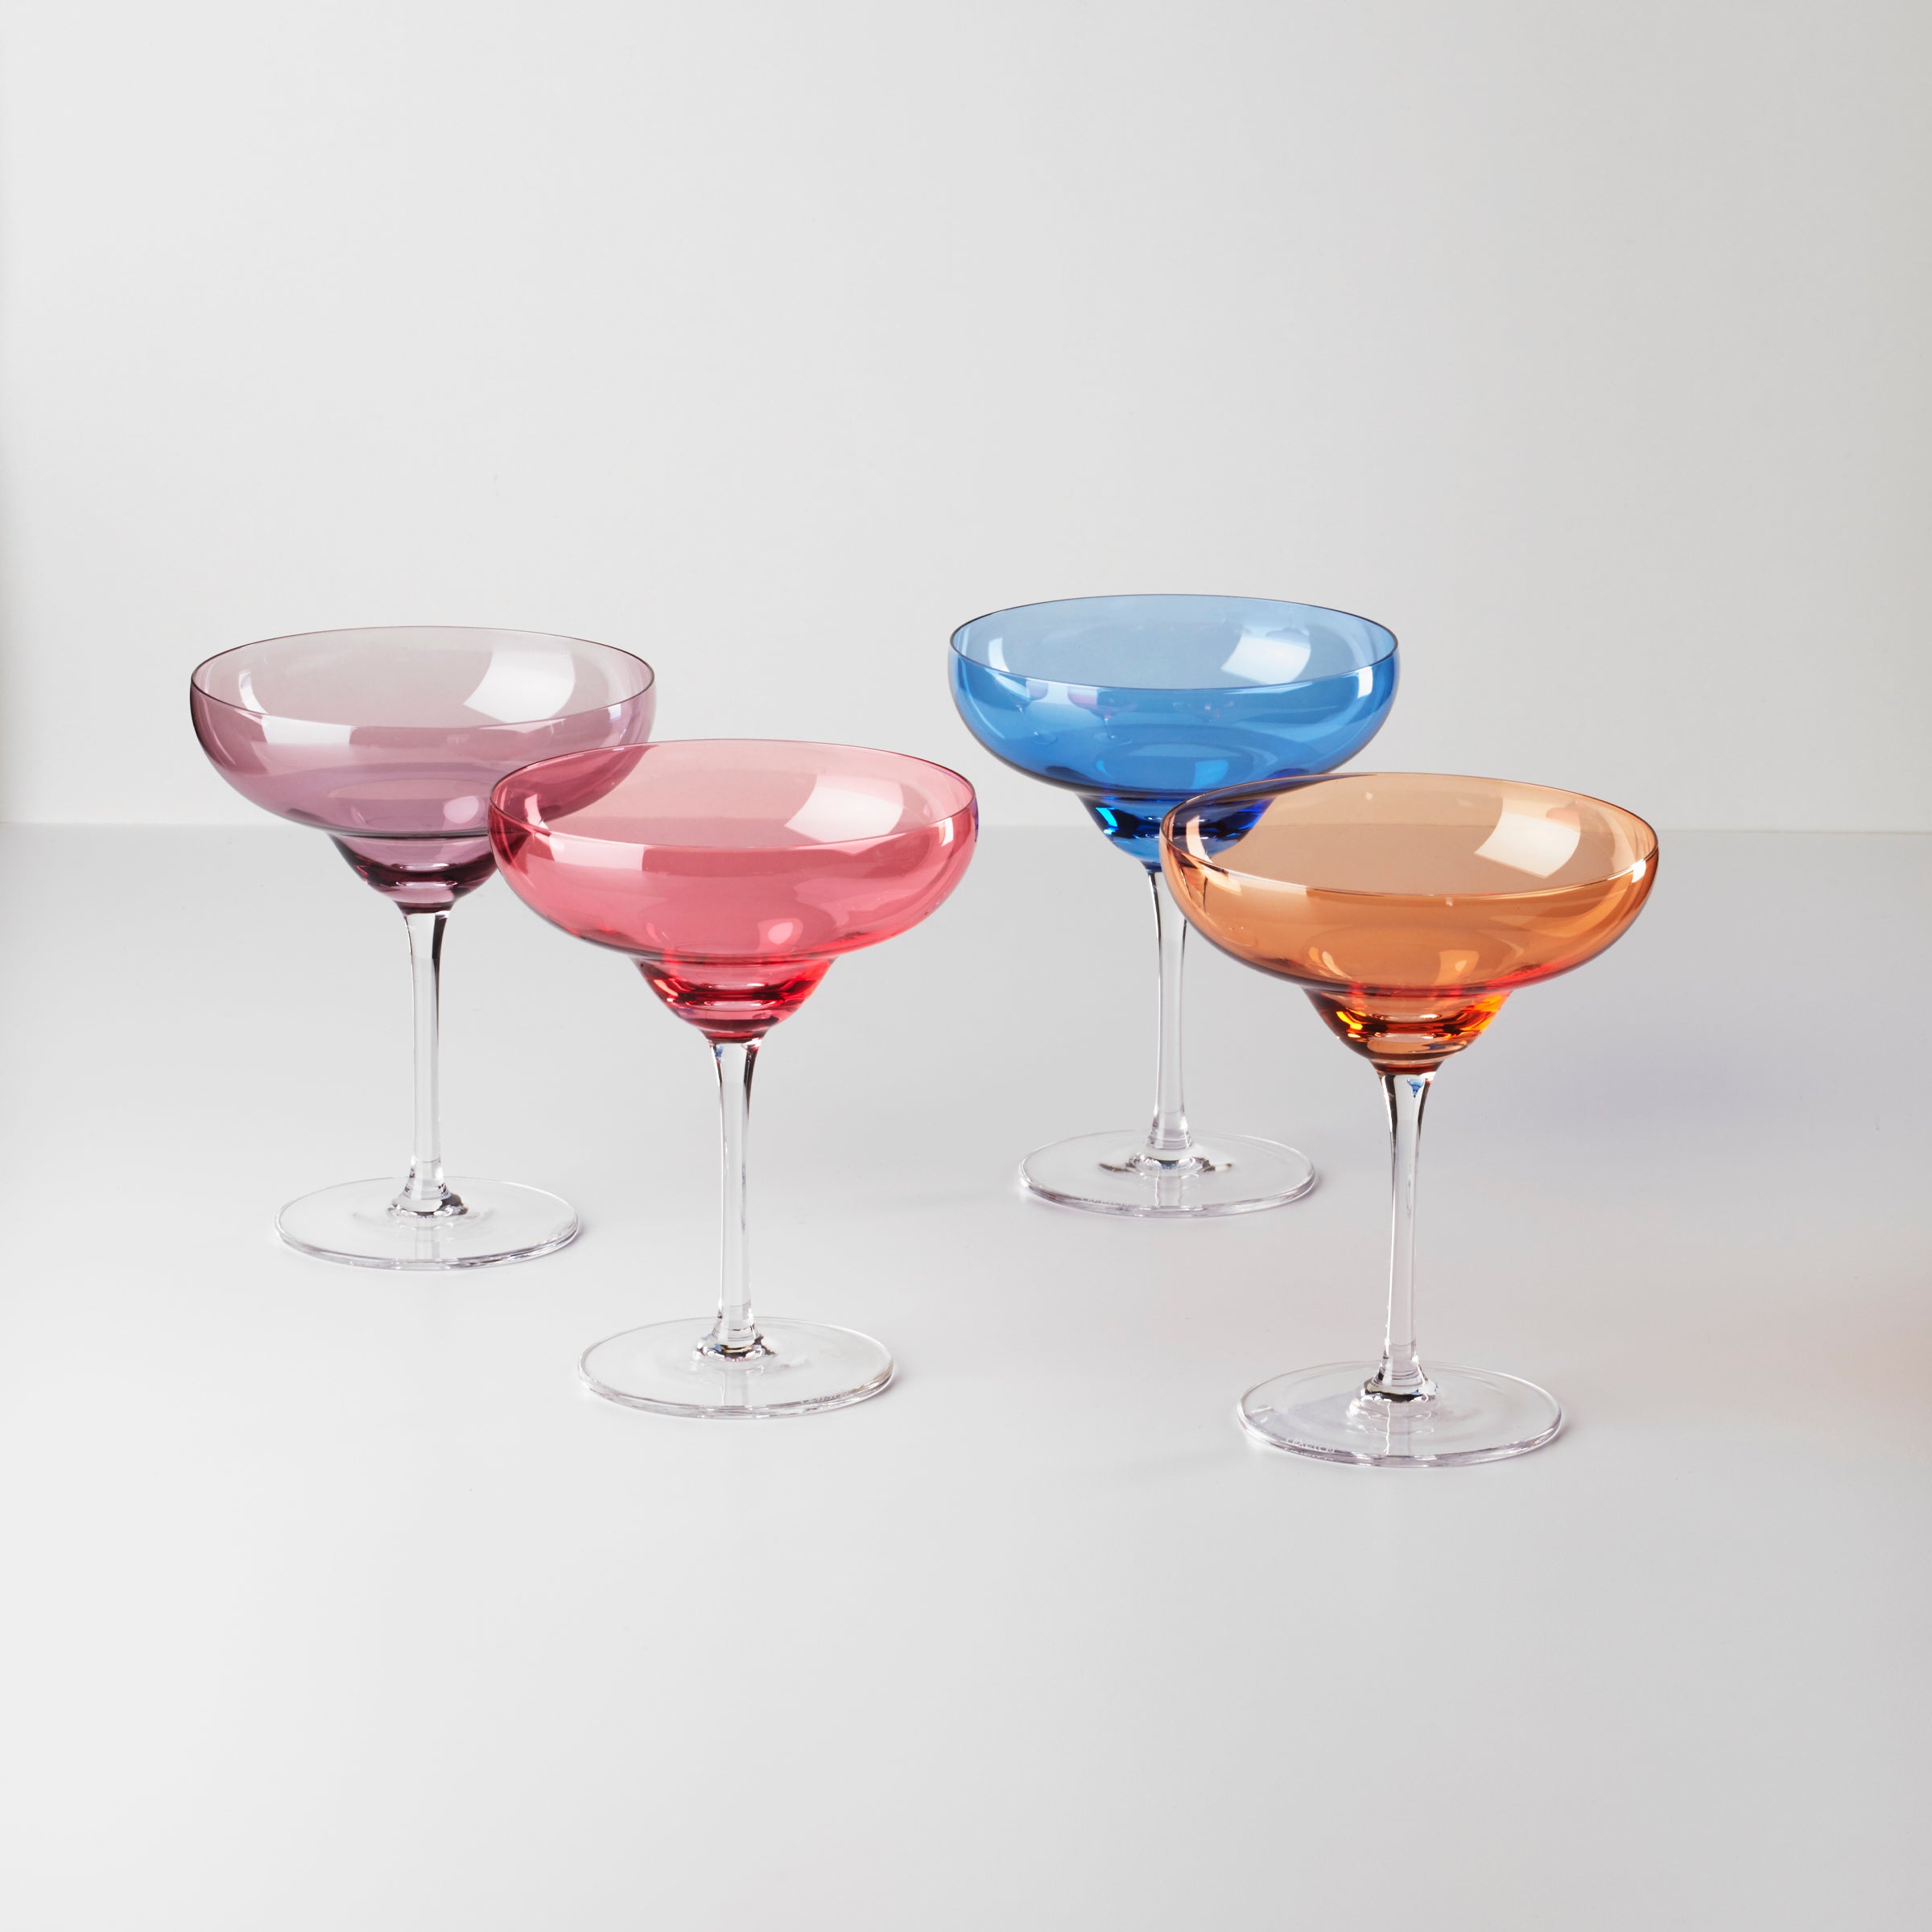 Oneida True Colors Margarita Glasses, Set of 4